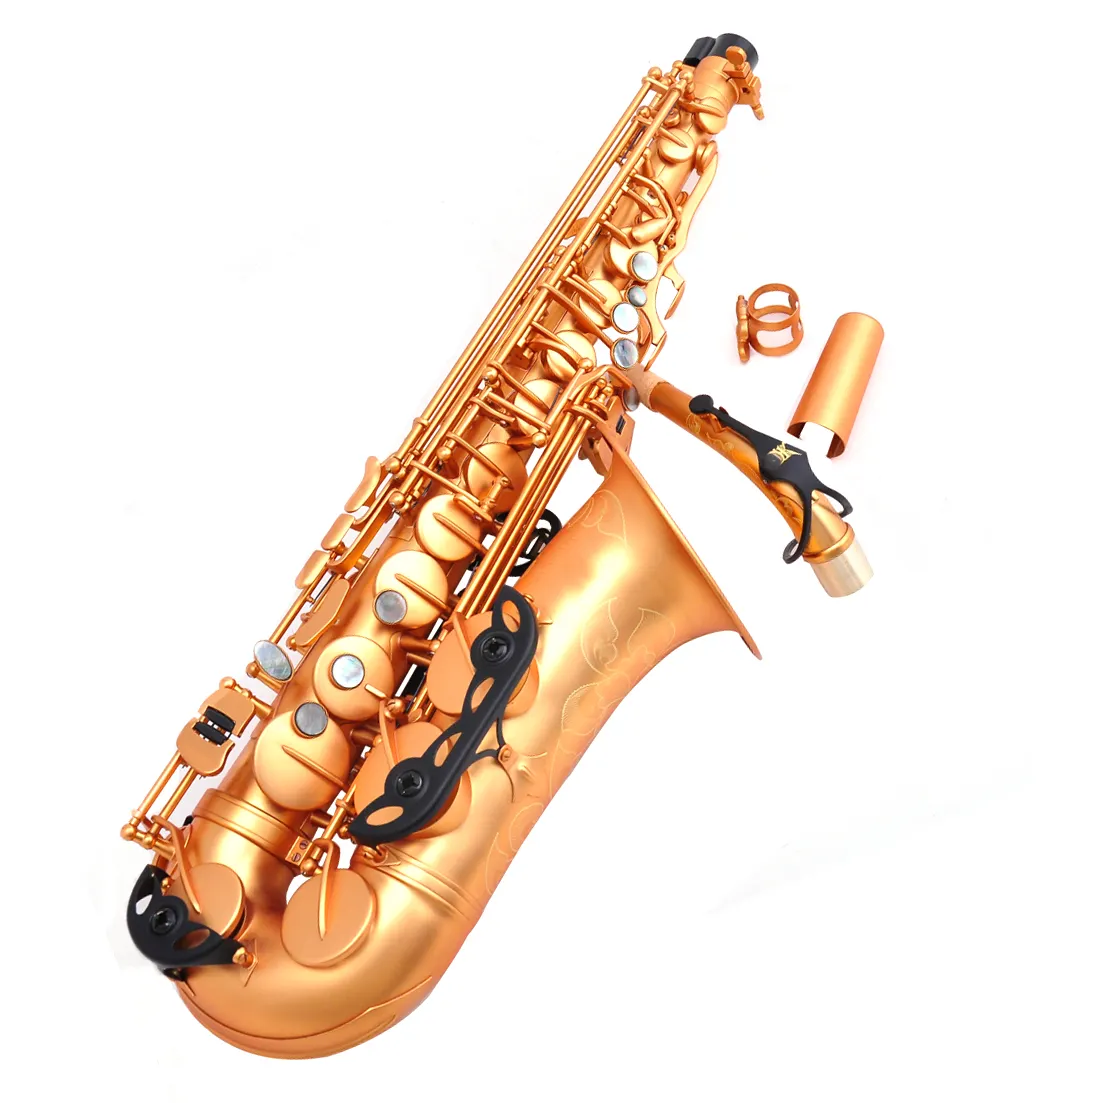 Saxofone banhado a ouro de areia corpo e chave alto saxofone com suporte de plástico